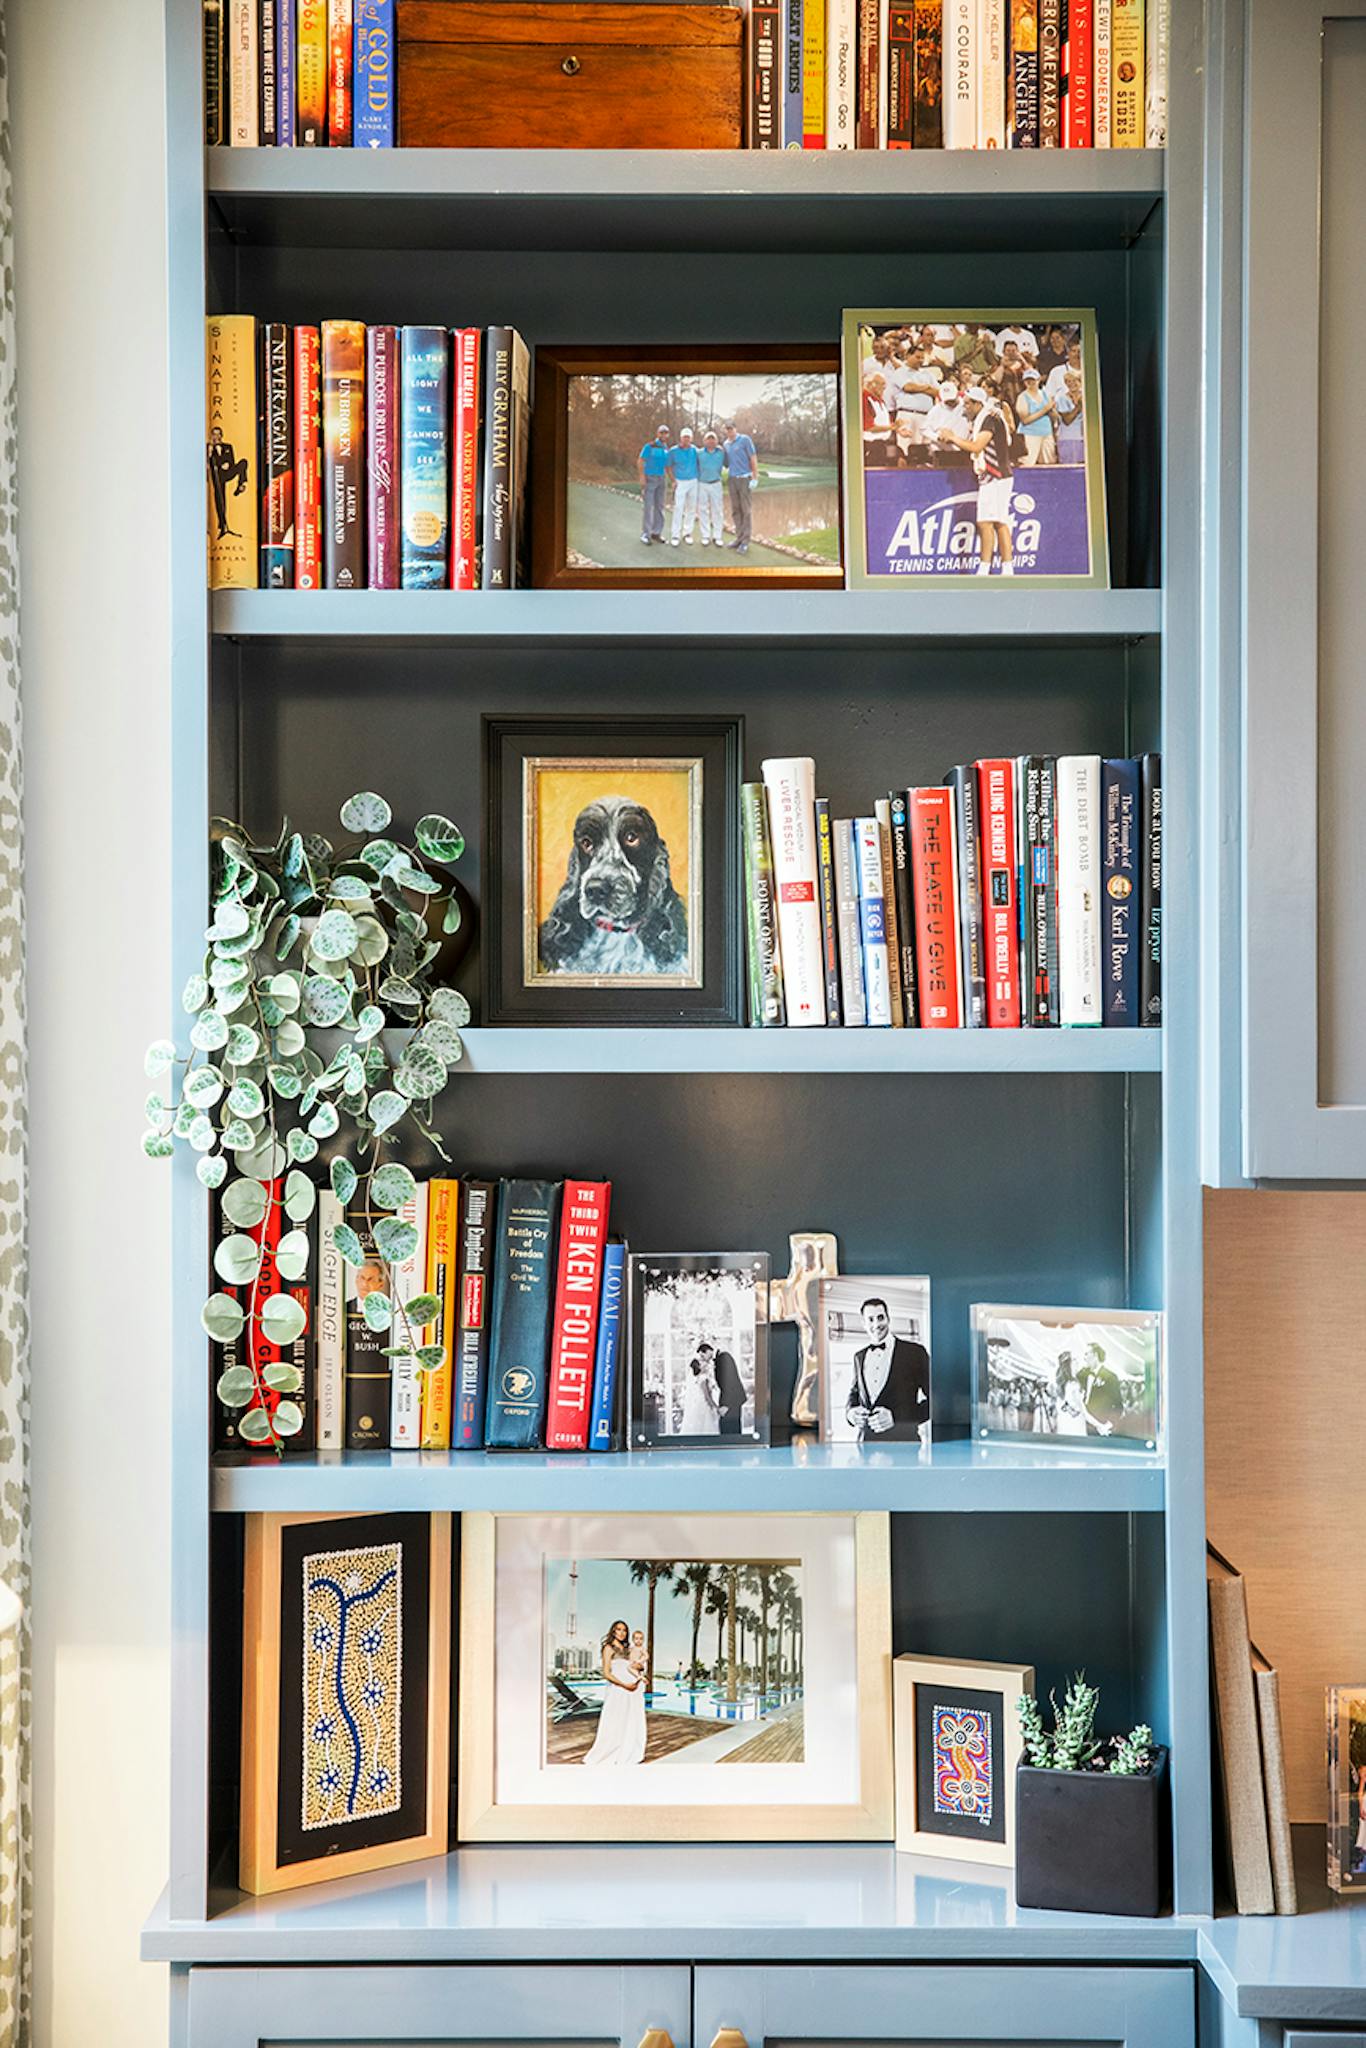 Madison McKinley Isner's bookshelf in her study.